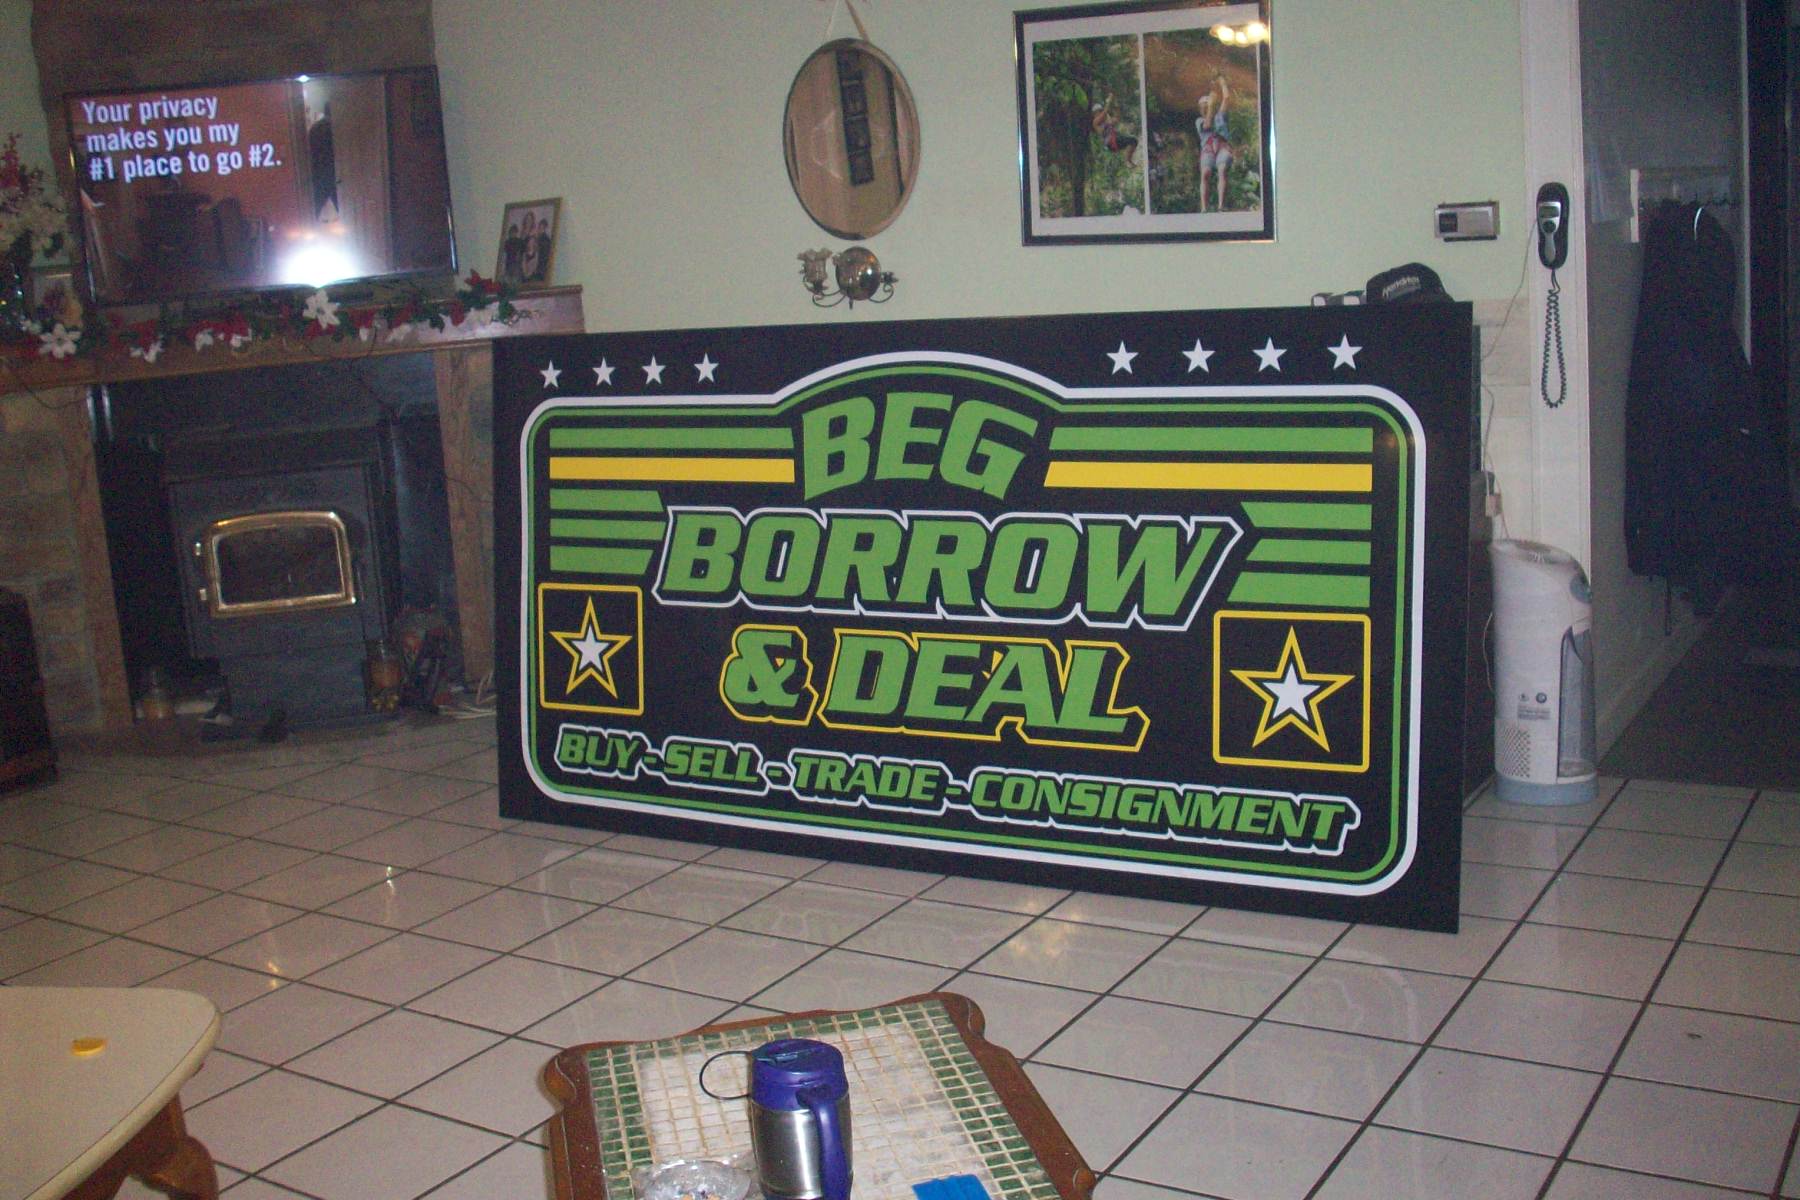 Beg Borrow and Deal Altoona Pa - Bed Borrow and Deal Juniata - Beg Borrow and Deal - Buy Sell Trade Consignment 